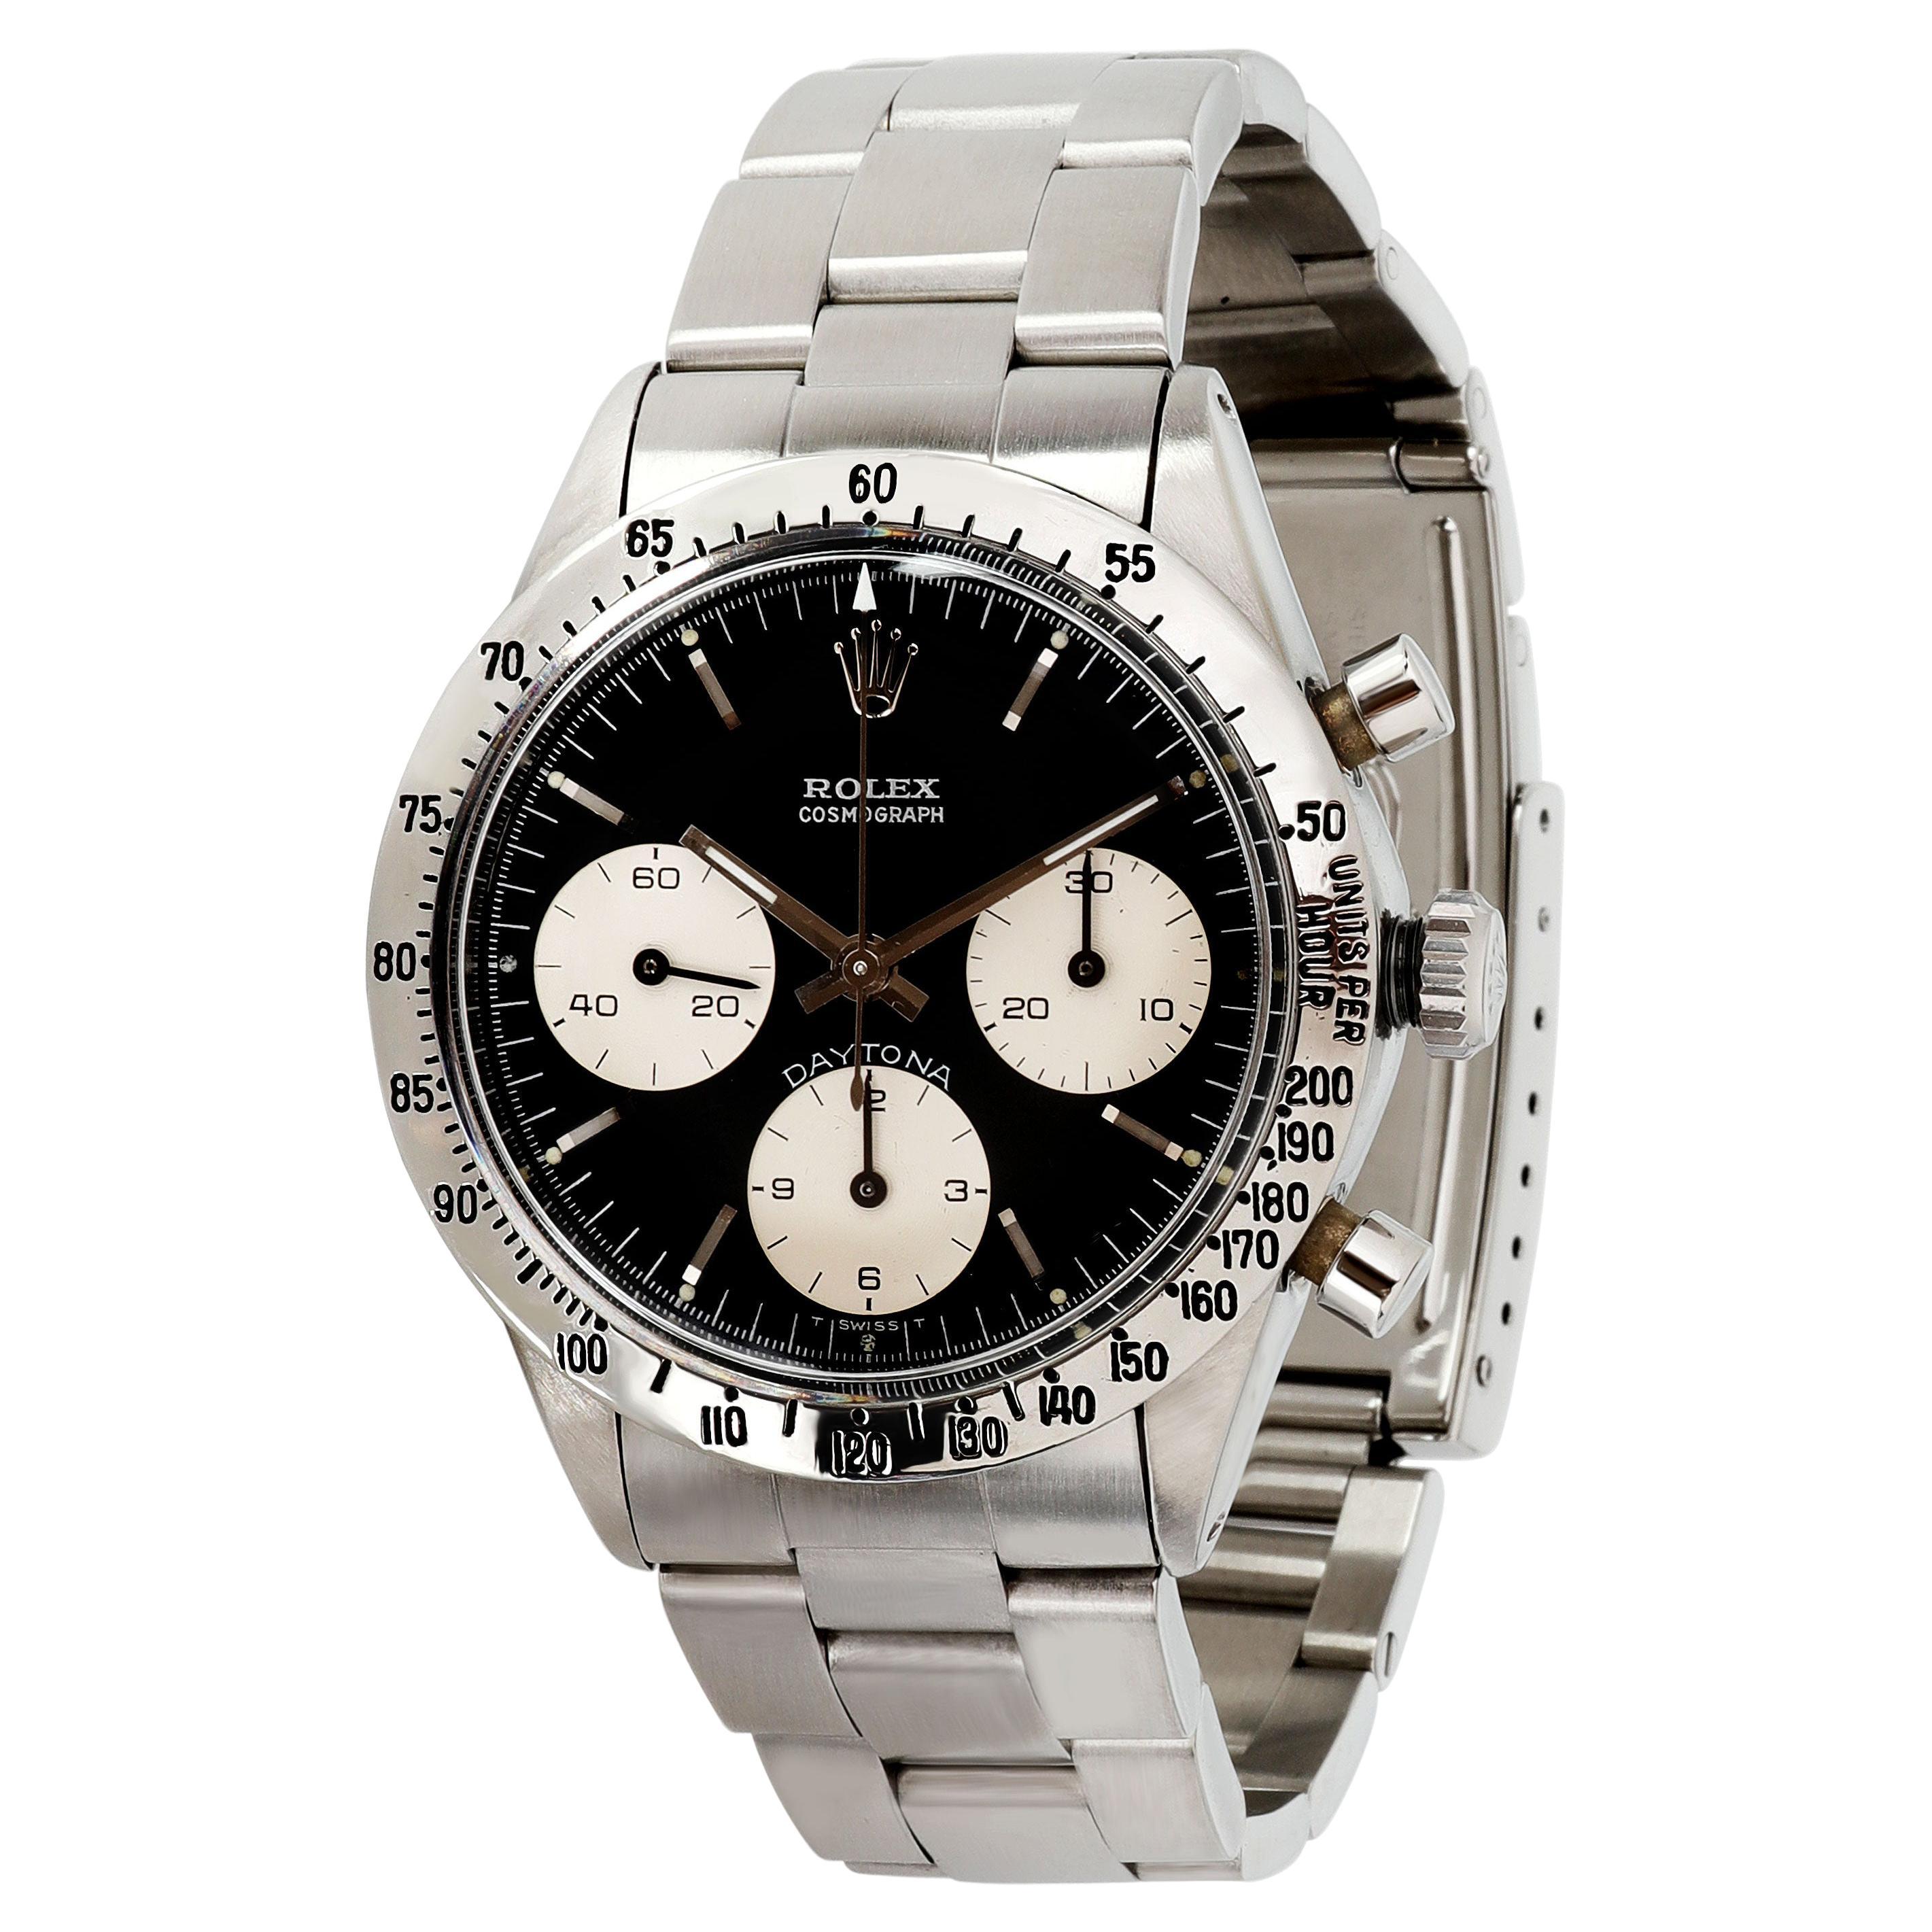 Rolex Cosmograph Daytona 6262 Men's Watch in Stainless Steel